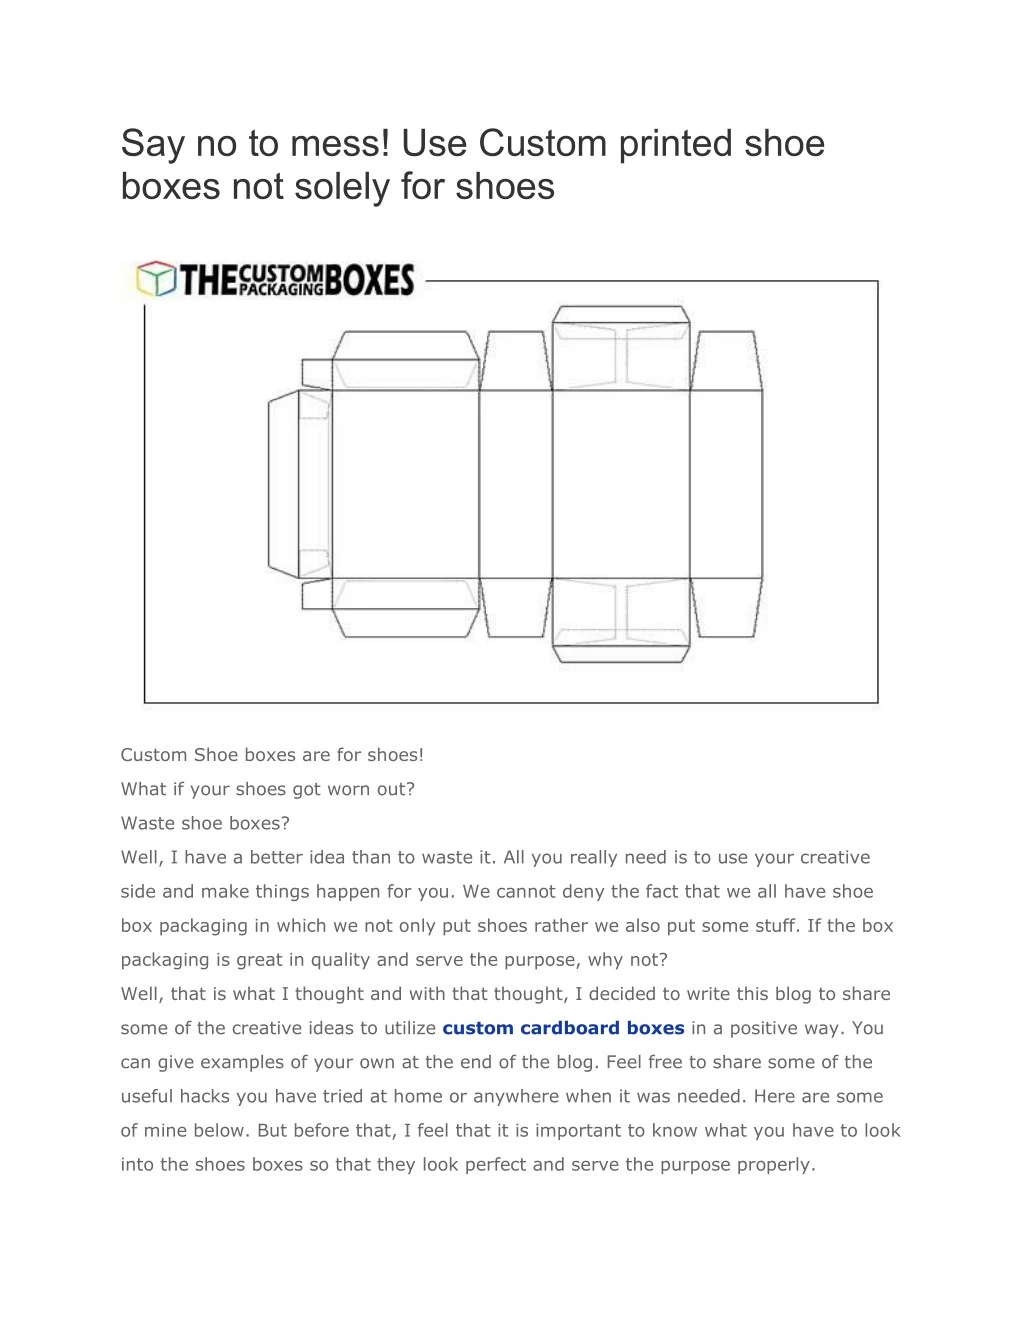 say no to mess use custom printed shoe boxes